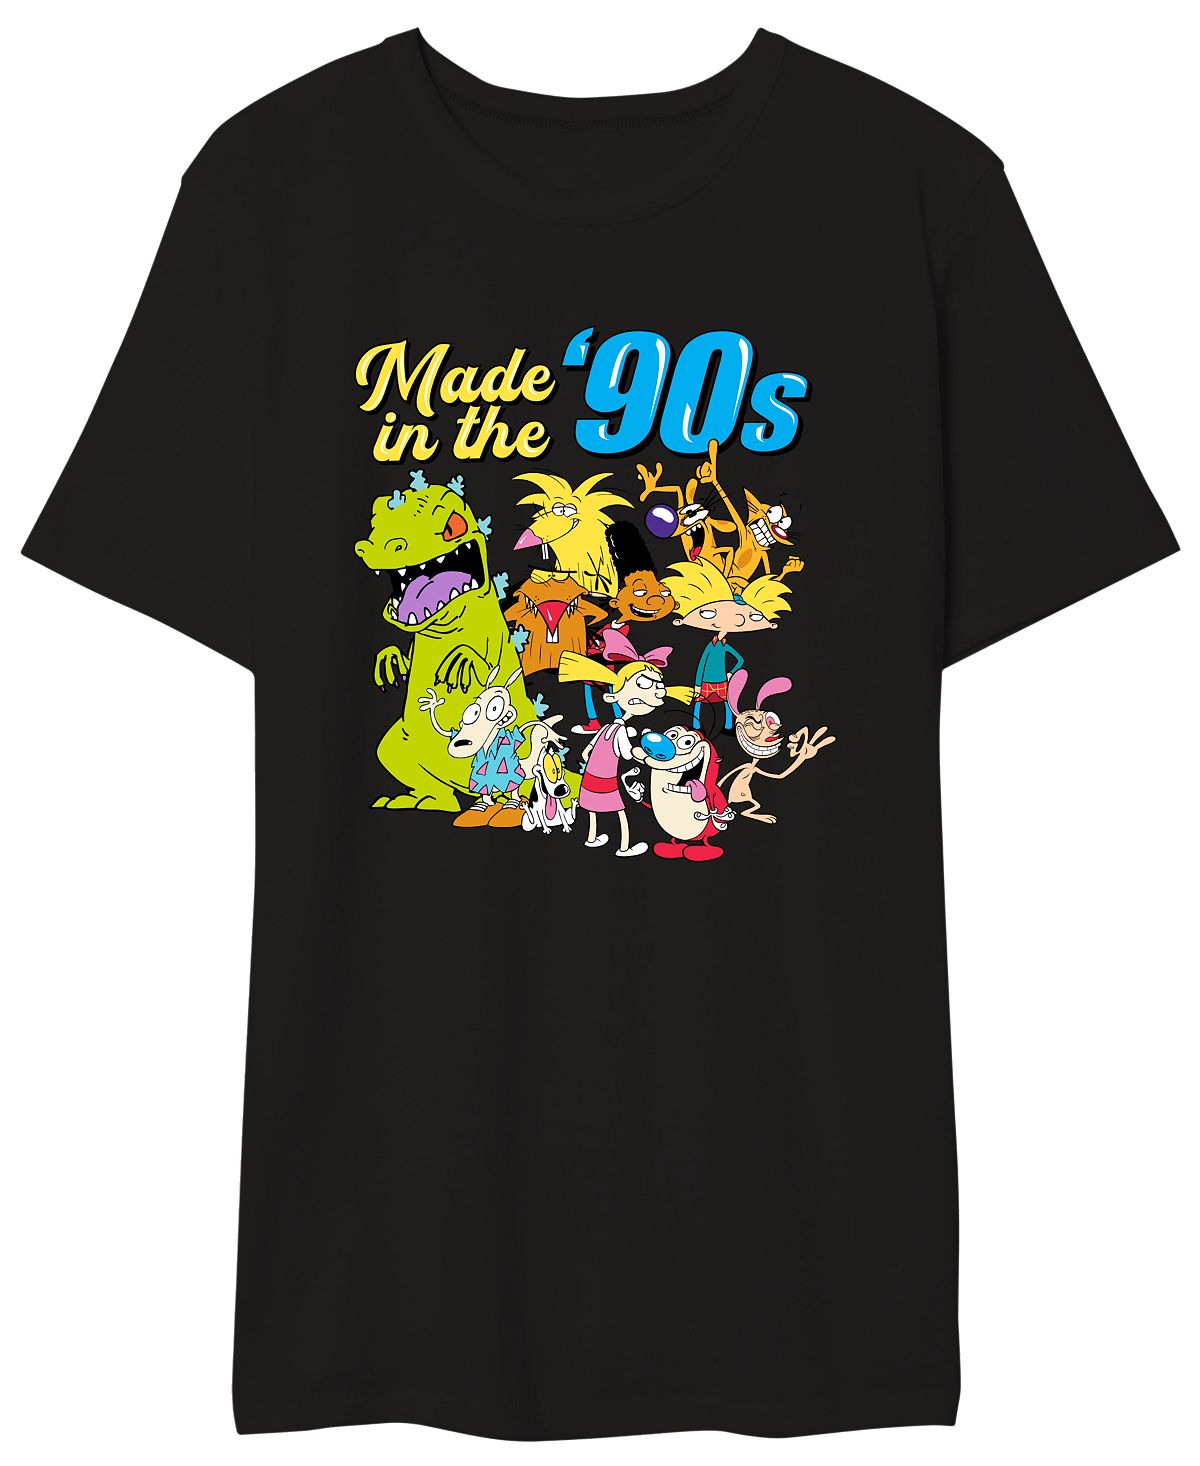 Мужская футболка Nickelodeon с рисунком 90-х годов AIRWAVES